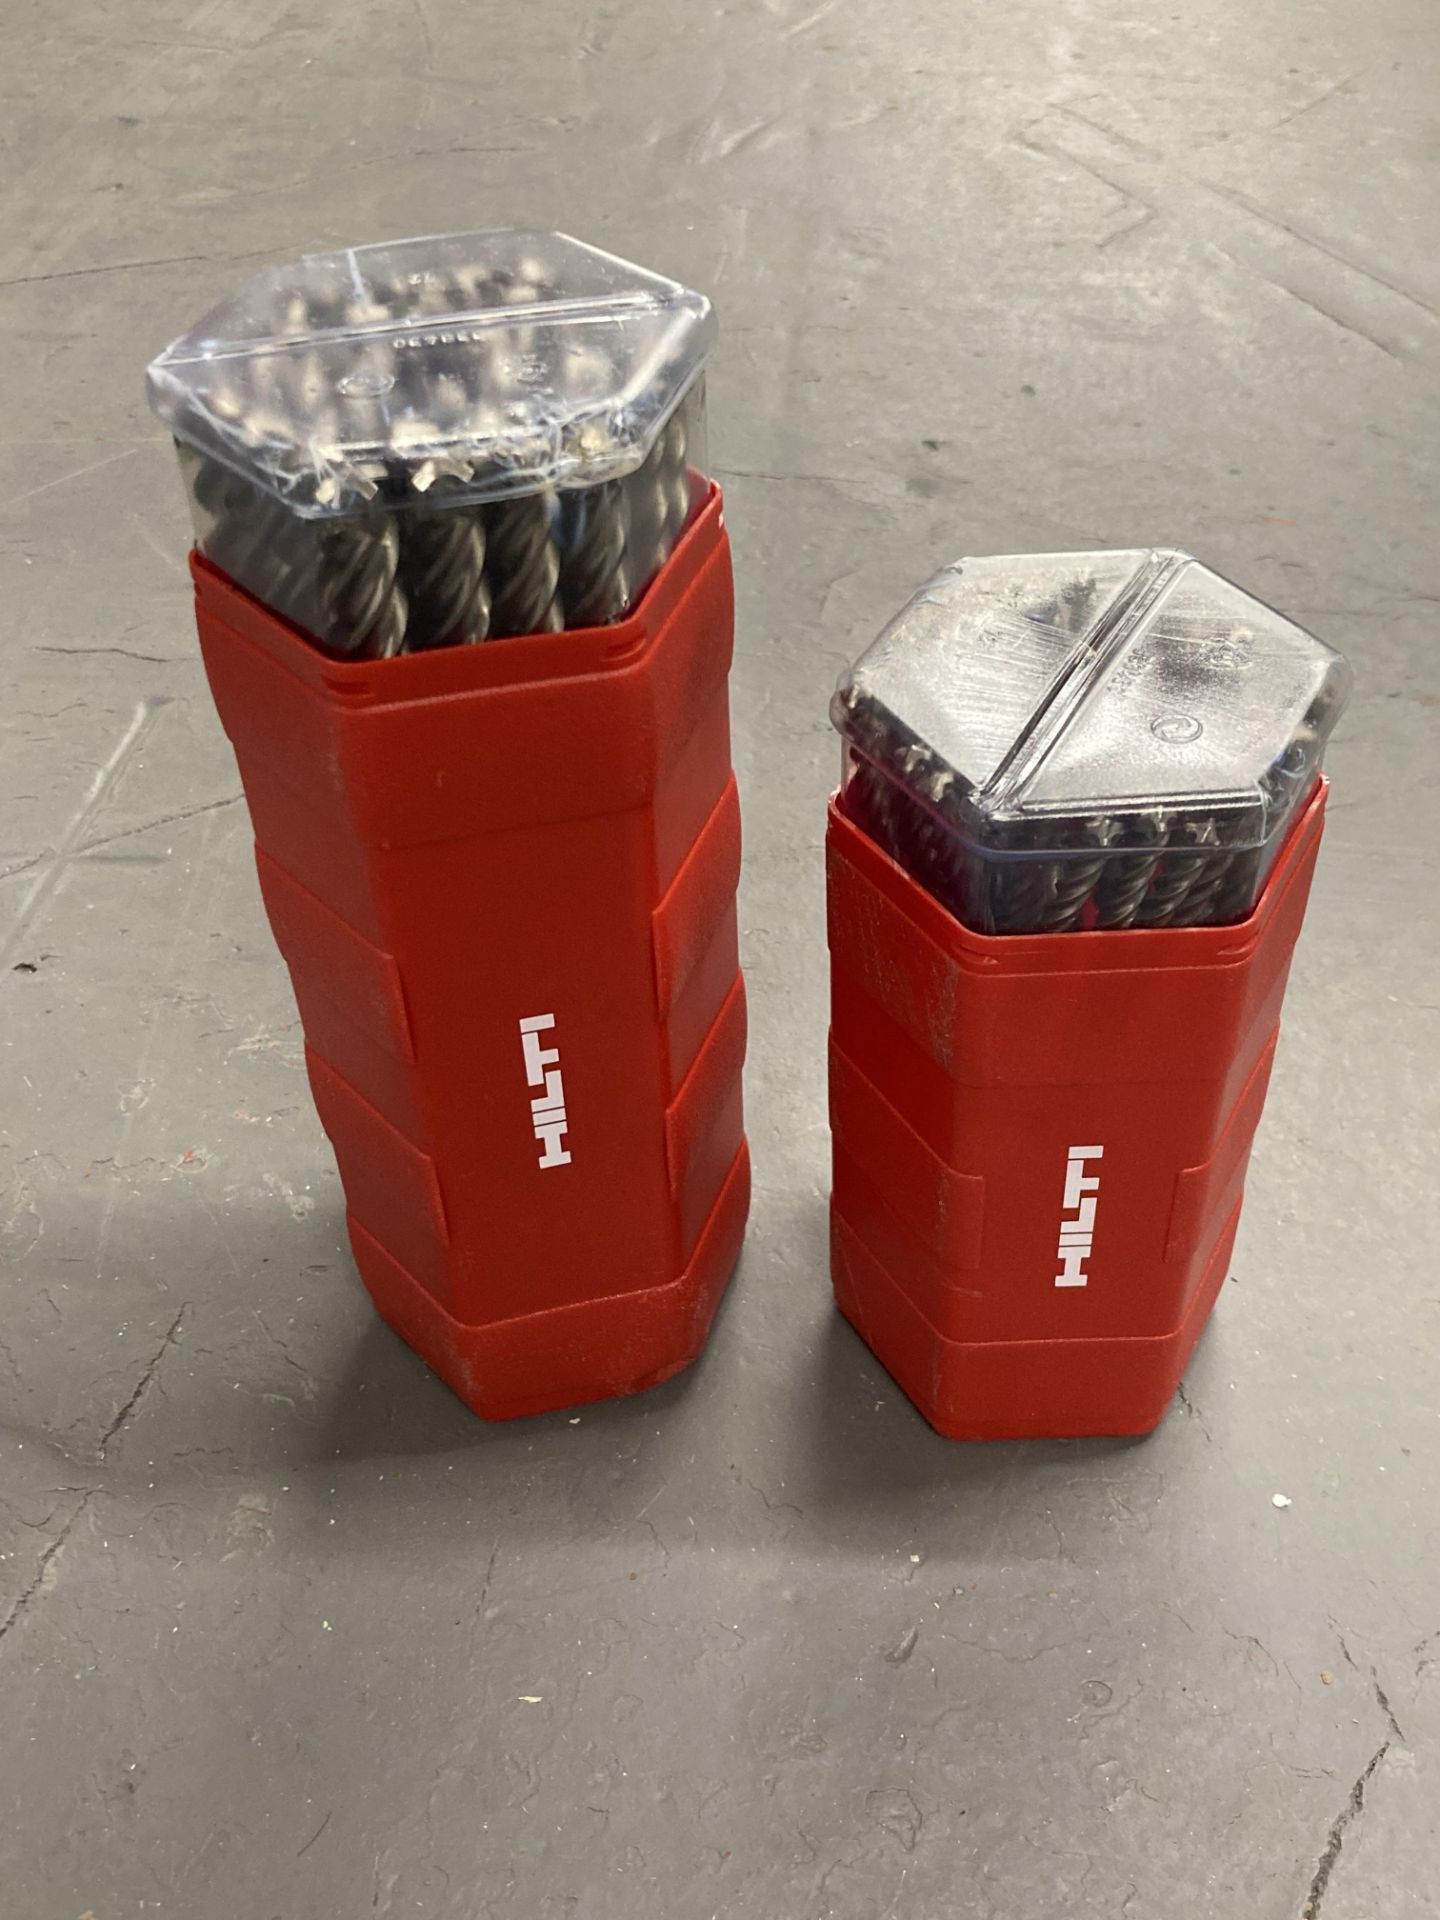 Two plastic cases of Hilti specialist drill bits.